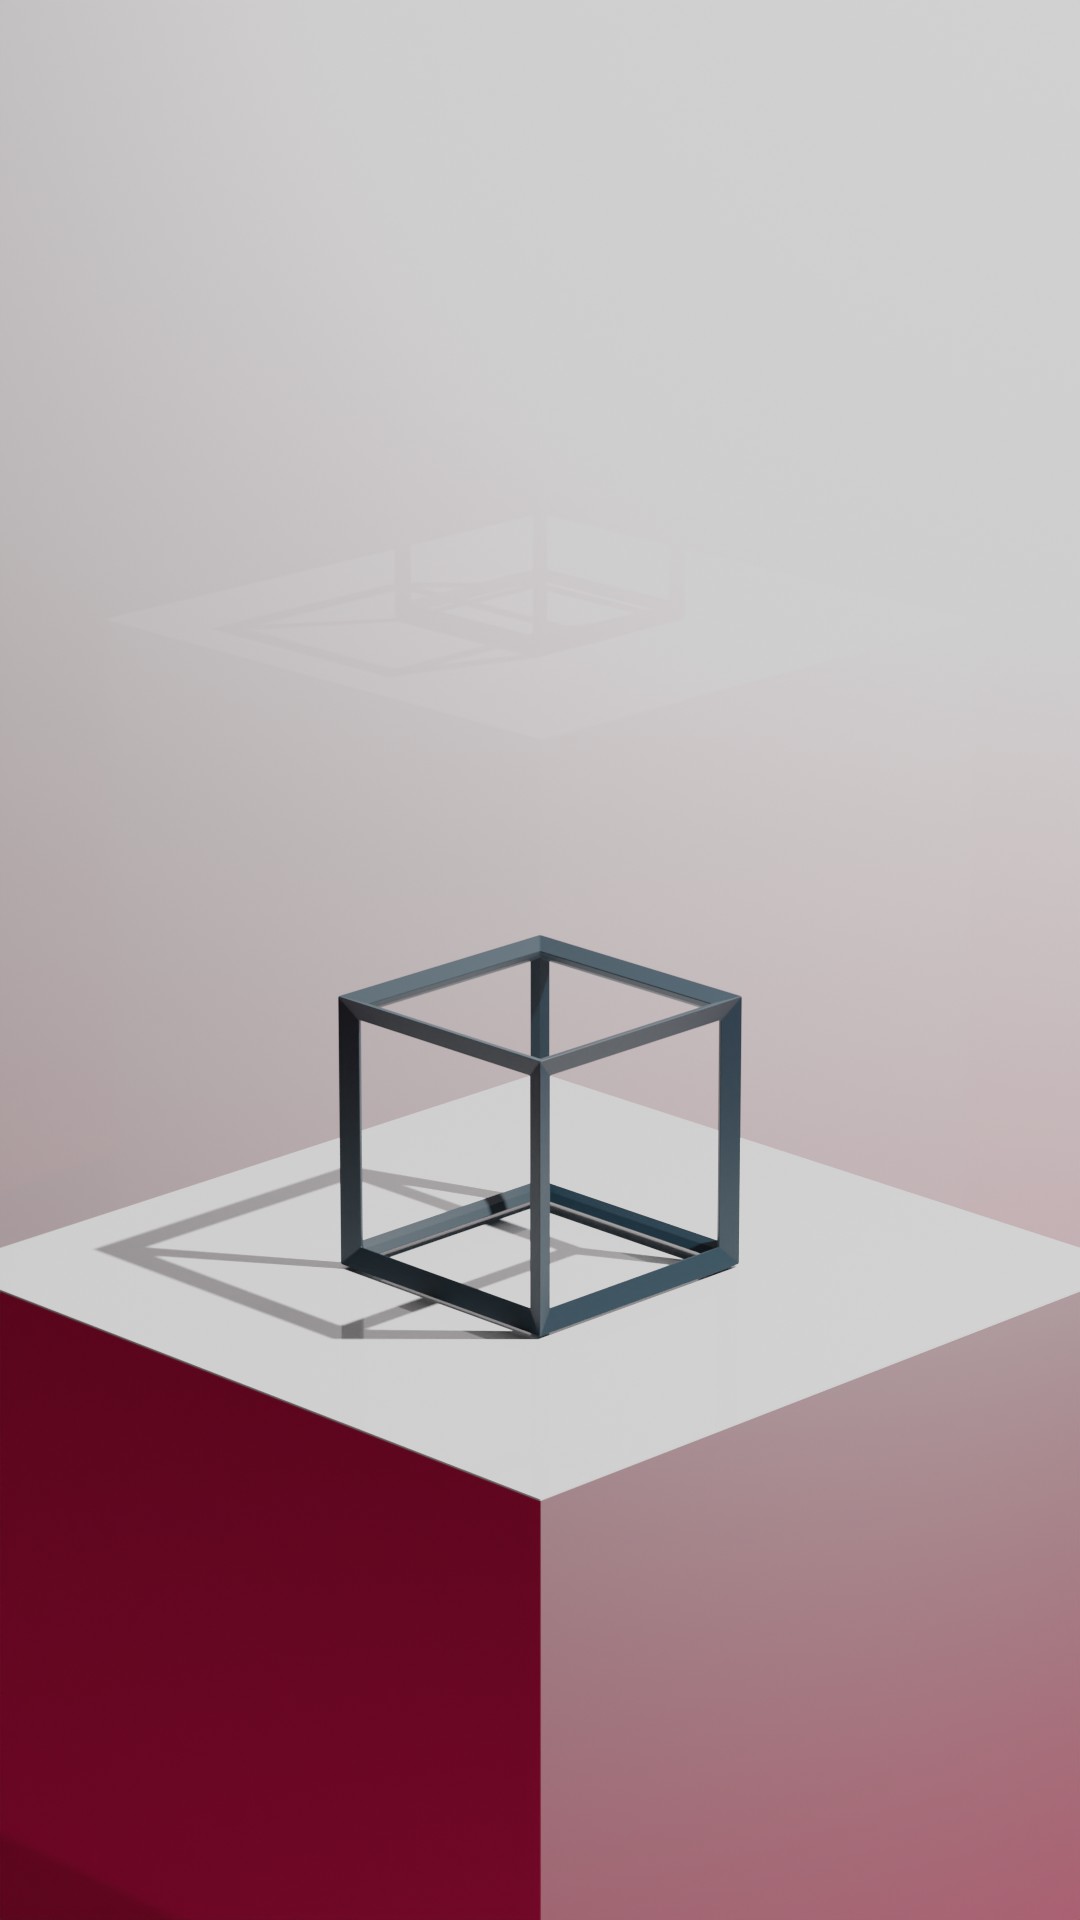 Cube #7770